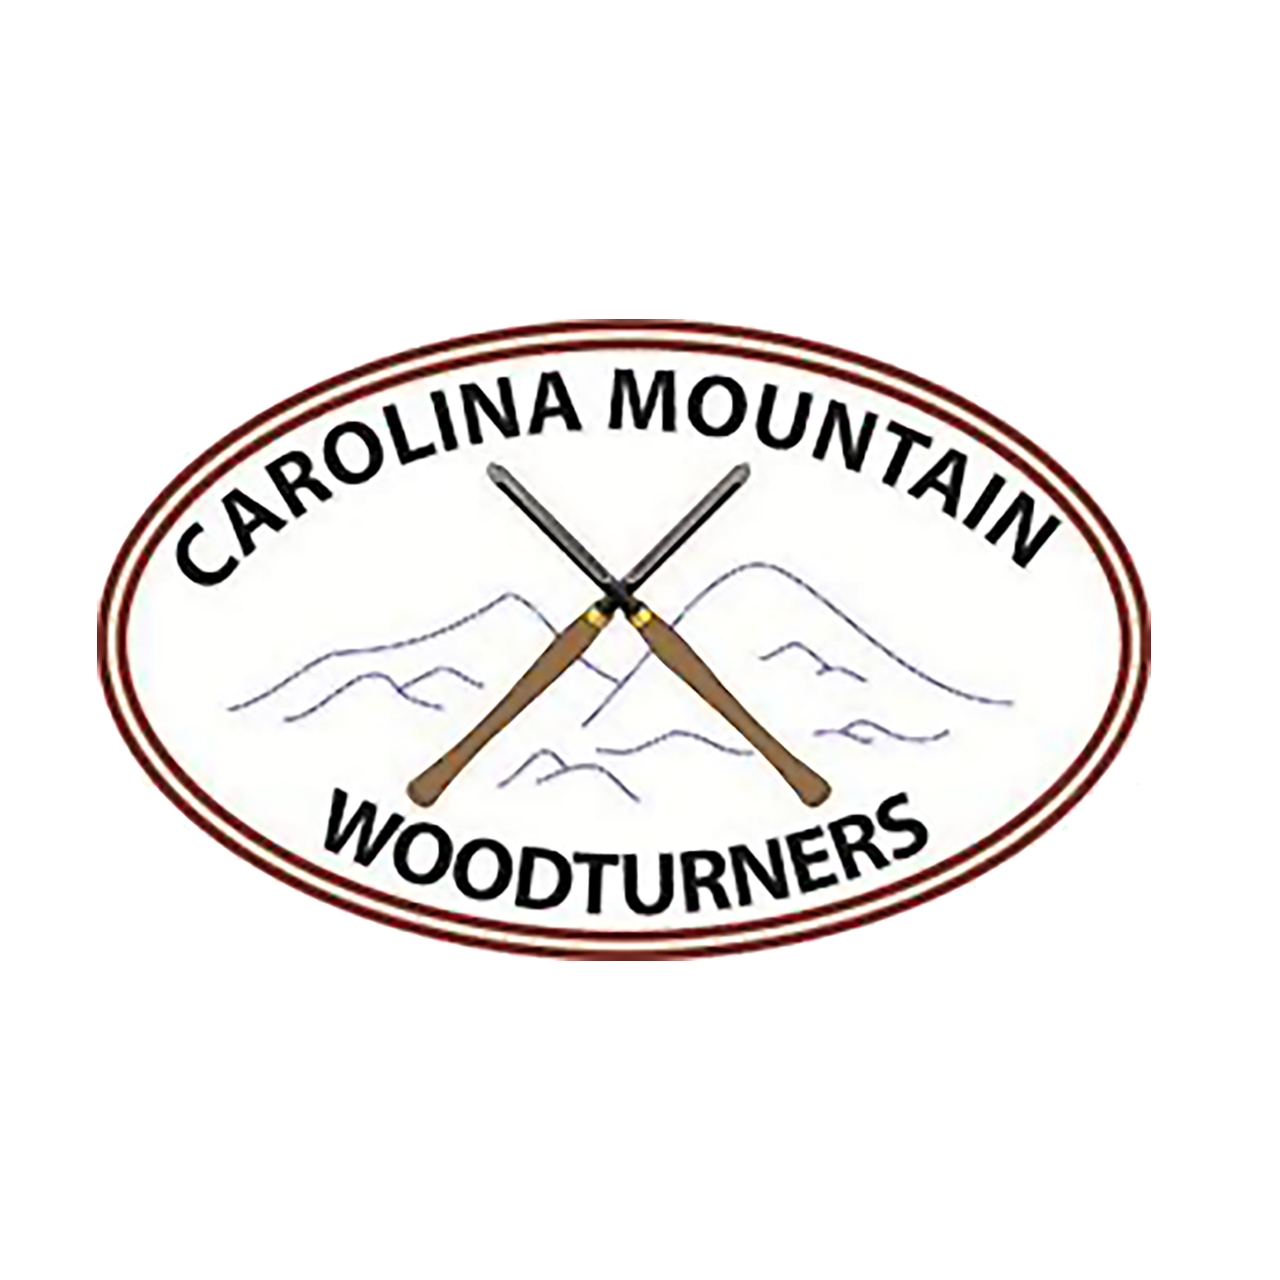 Carolina Mountain Woodturners